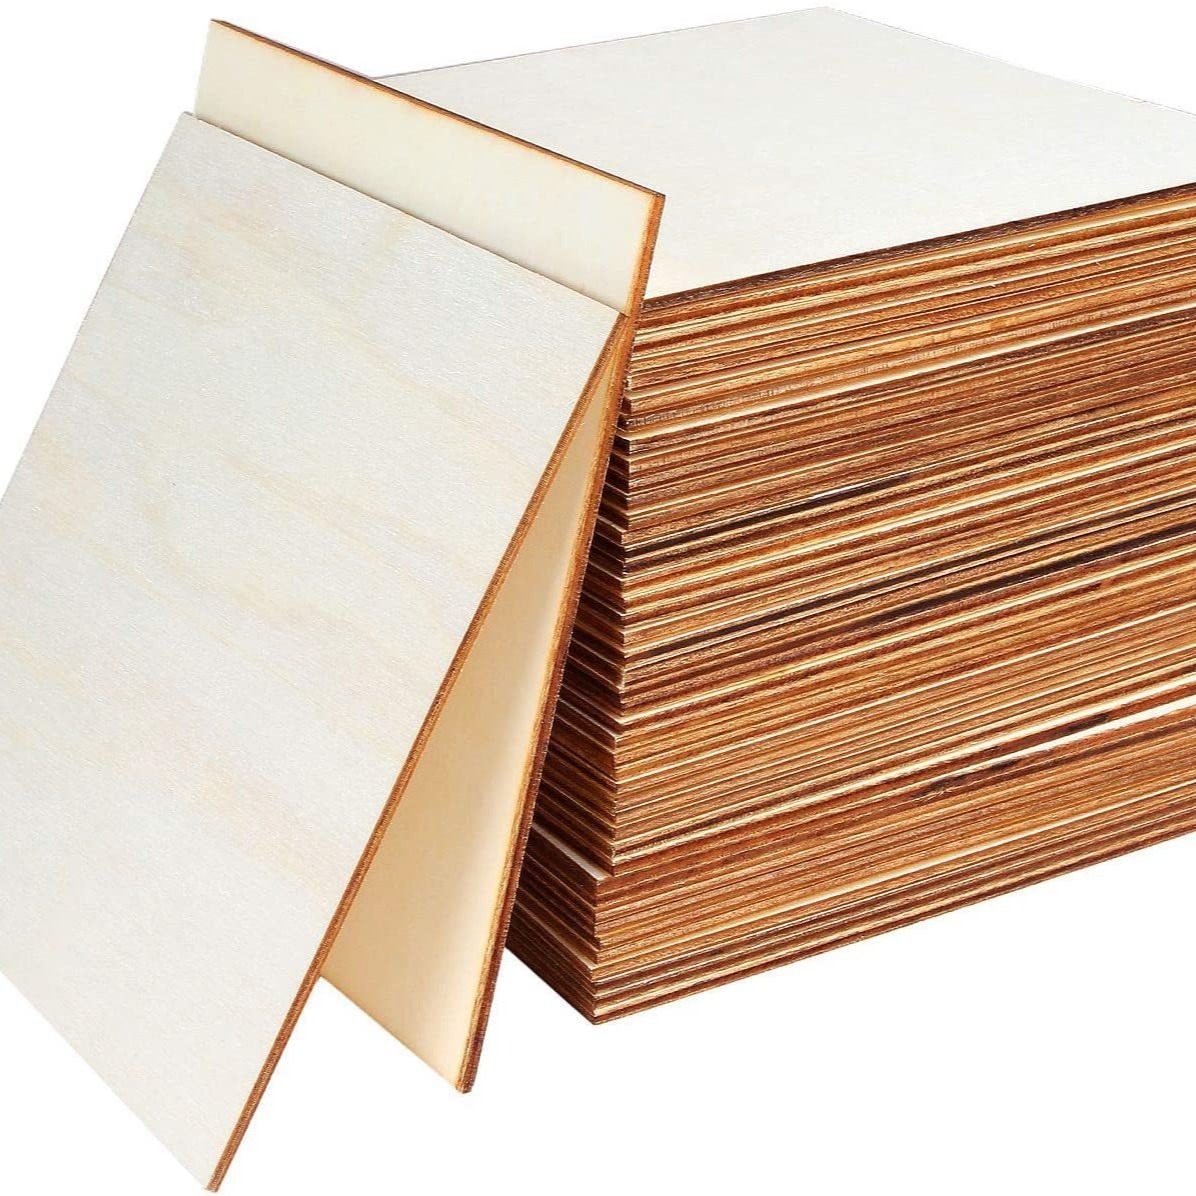 3mm 4mm 双面桦木 工艺品胶合板 多层板 三合板 可雕刻